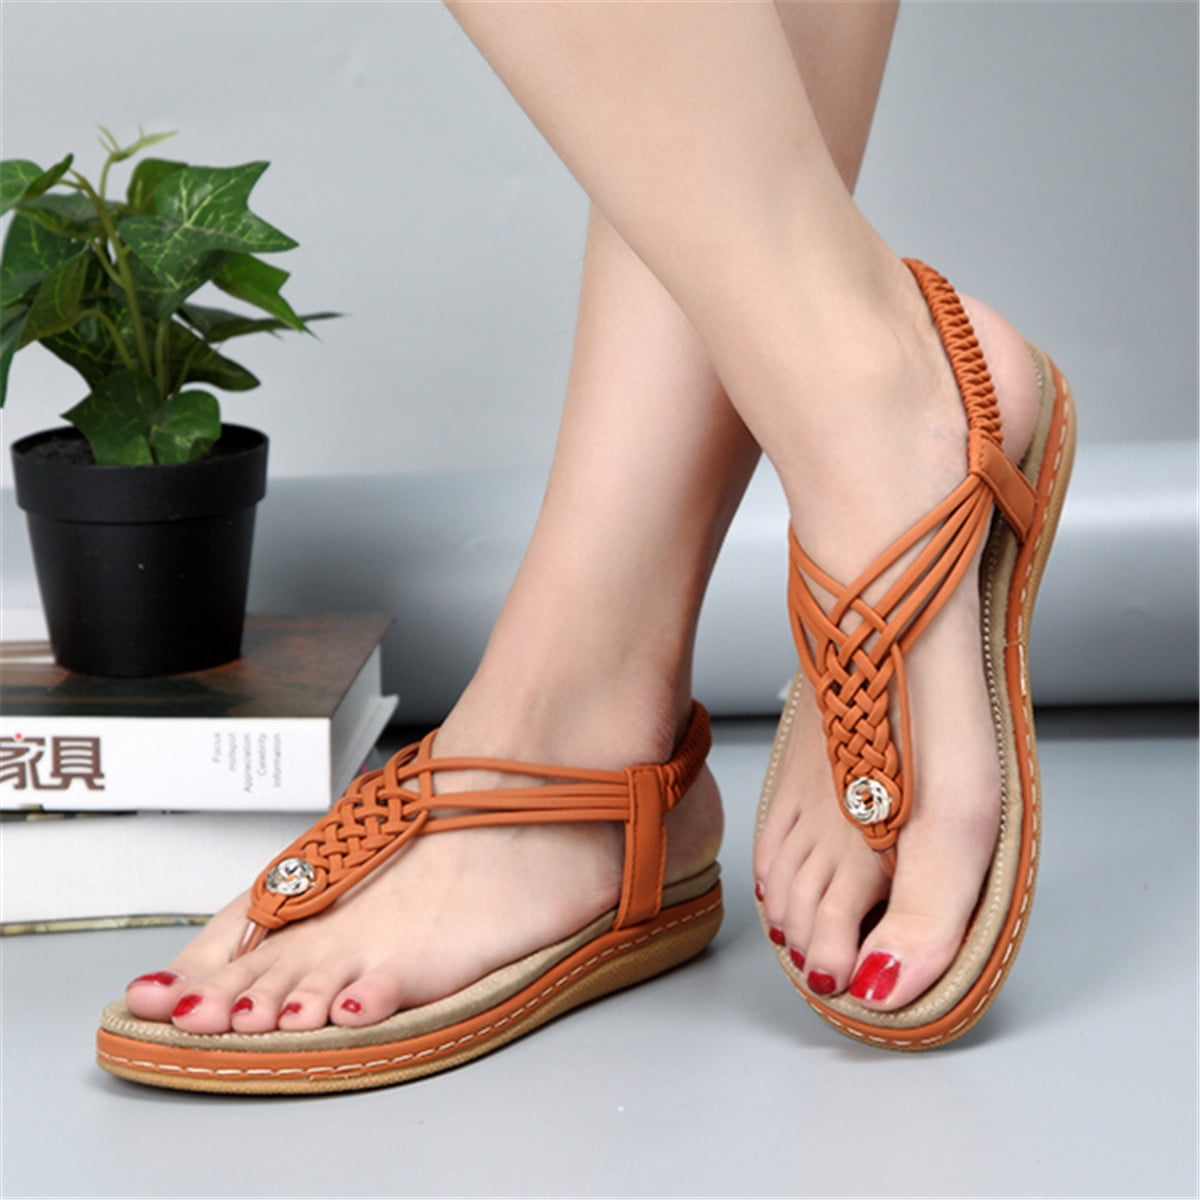 UOCUFY Sandals for Women Dressy Summer,Womens 2021 Platform Casual Comfy Sandal Shoes Summer Beach Travel Slipper Flip Flops 